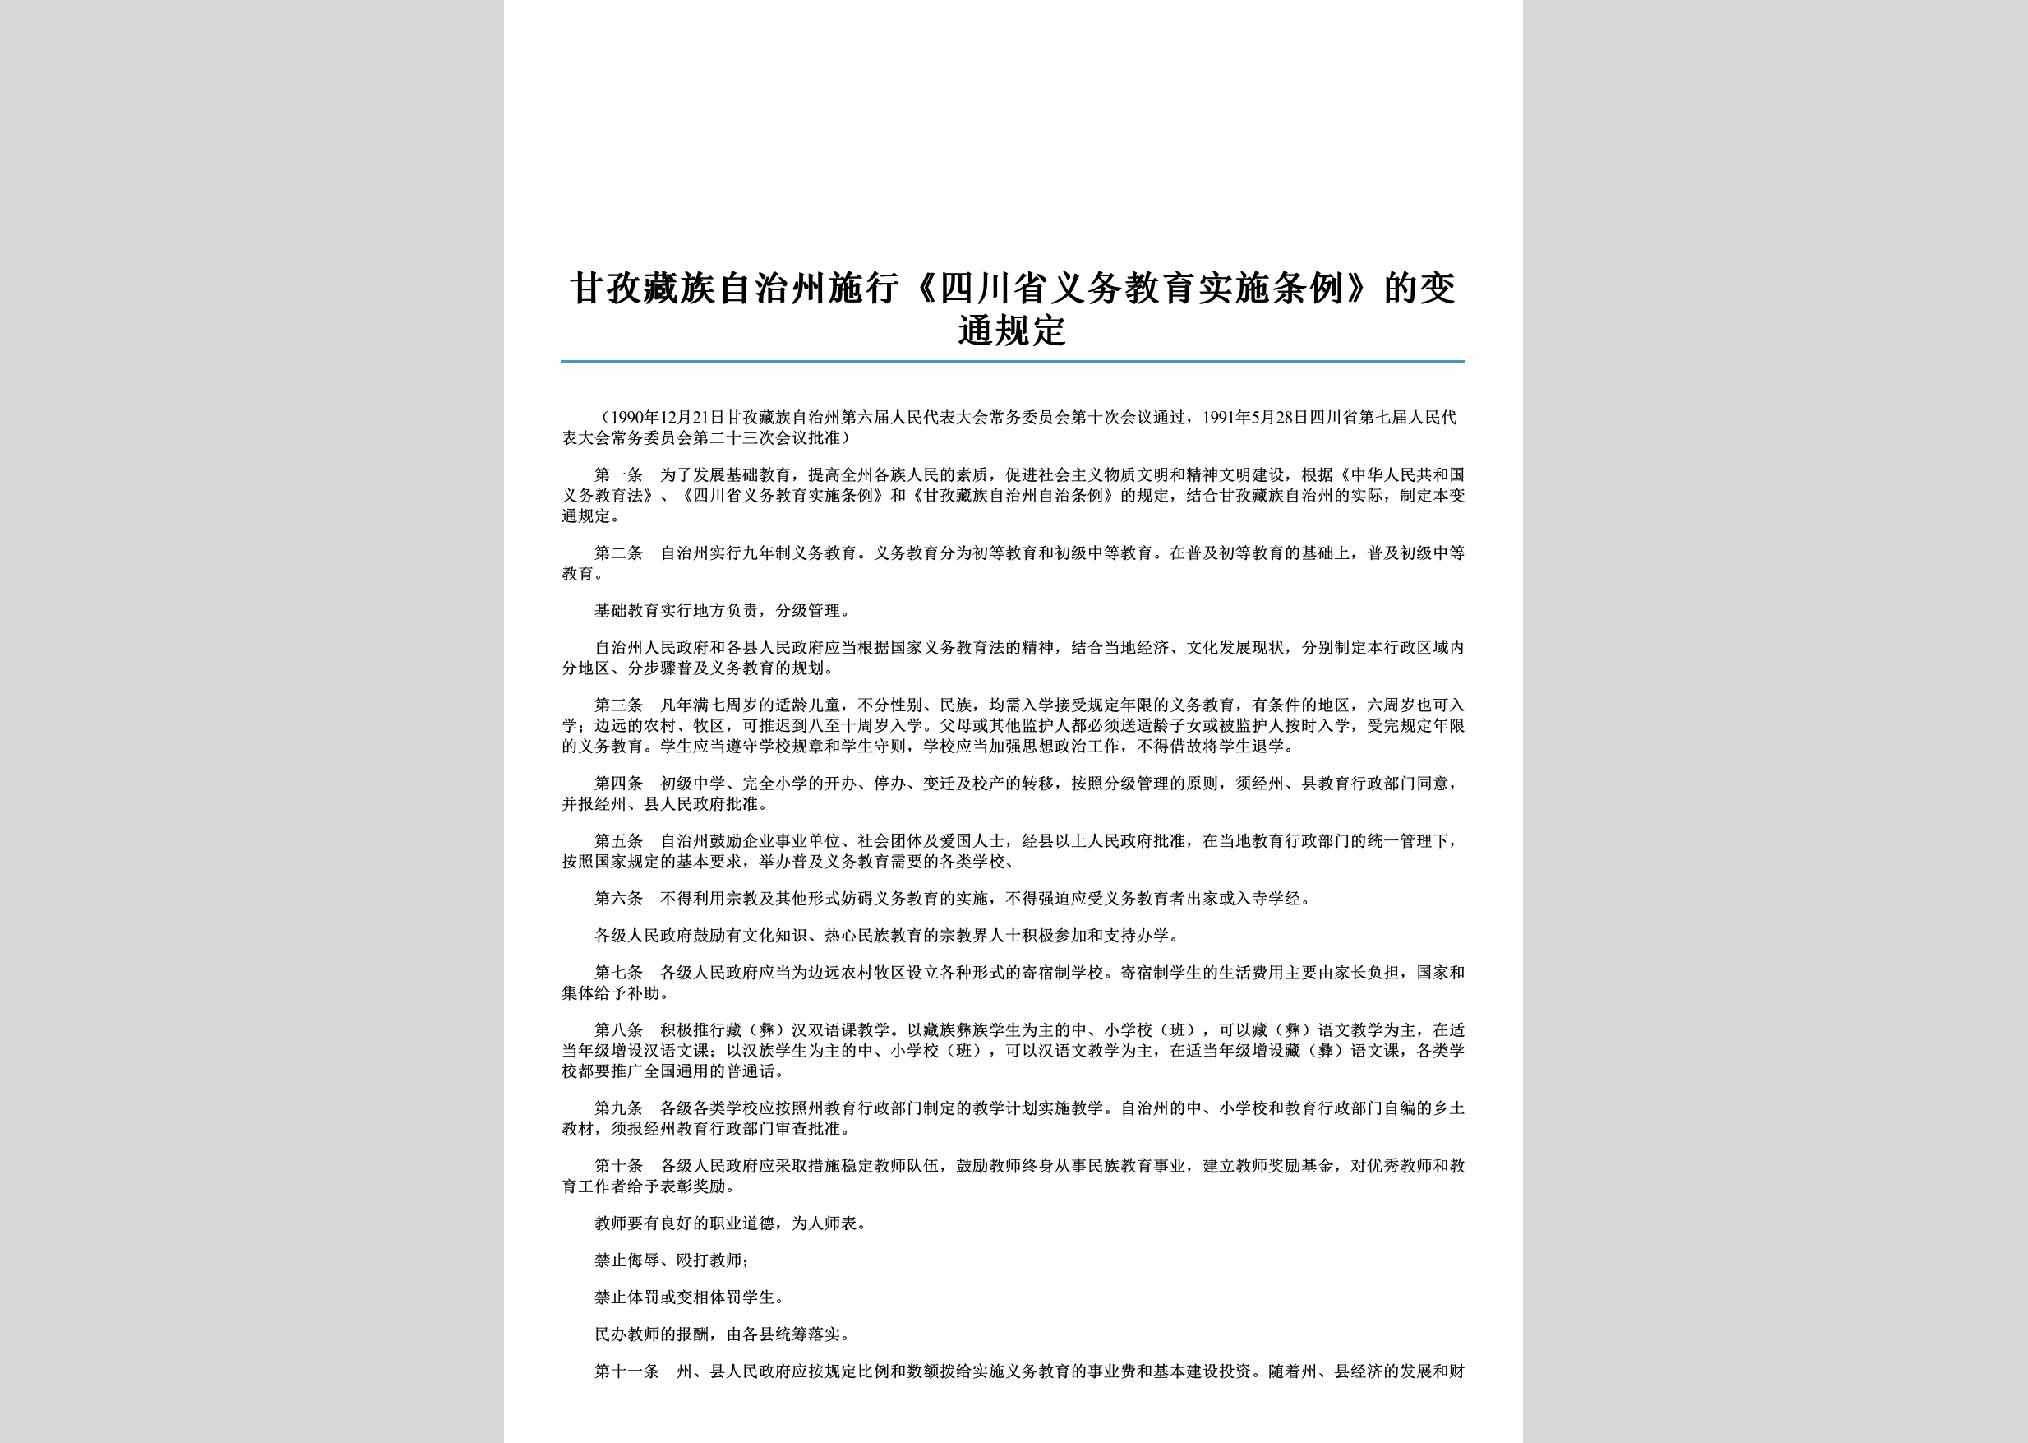 SC-SXJYBTGD-2006：甘孜藏族自治州施行《四川省义务教育实施条例》的变通规定